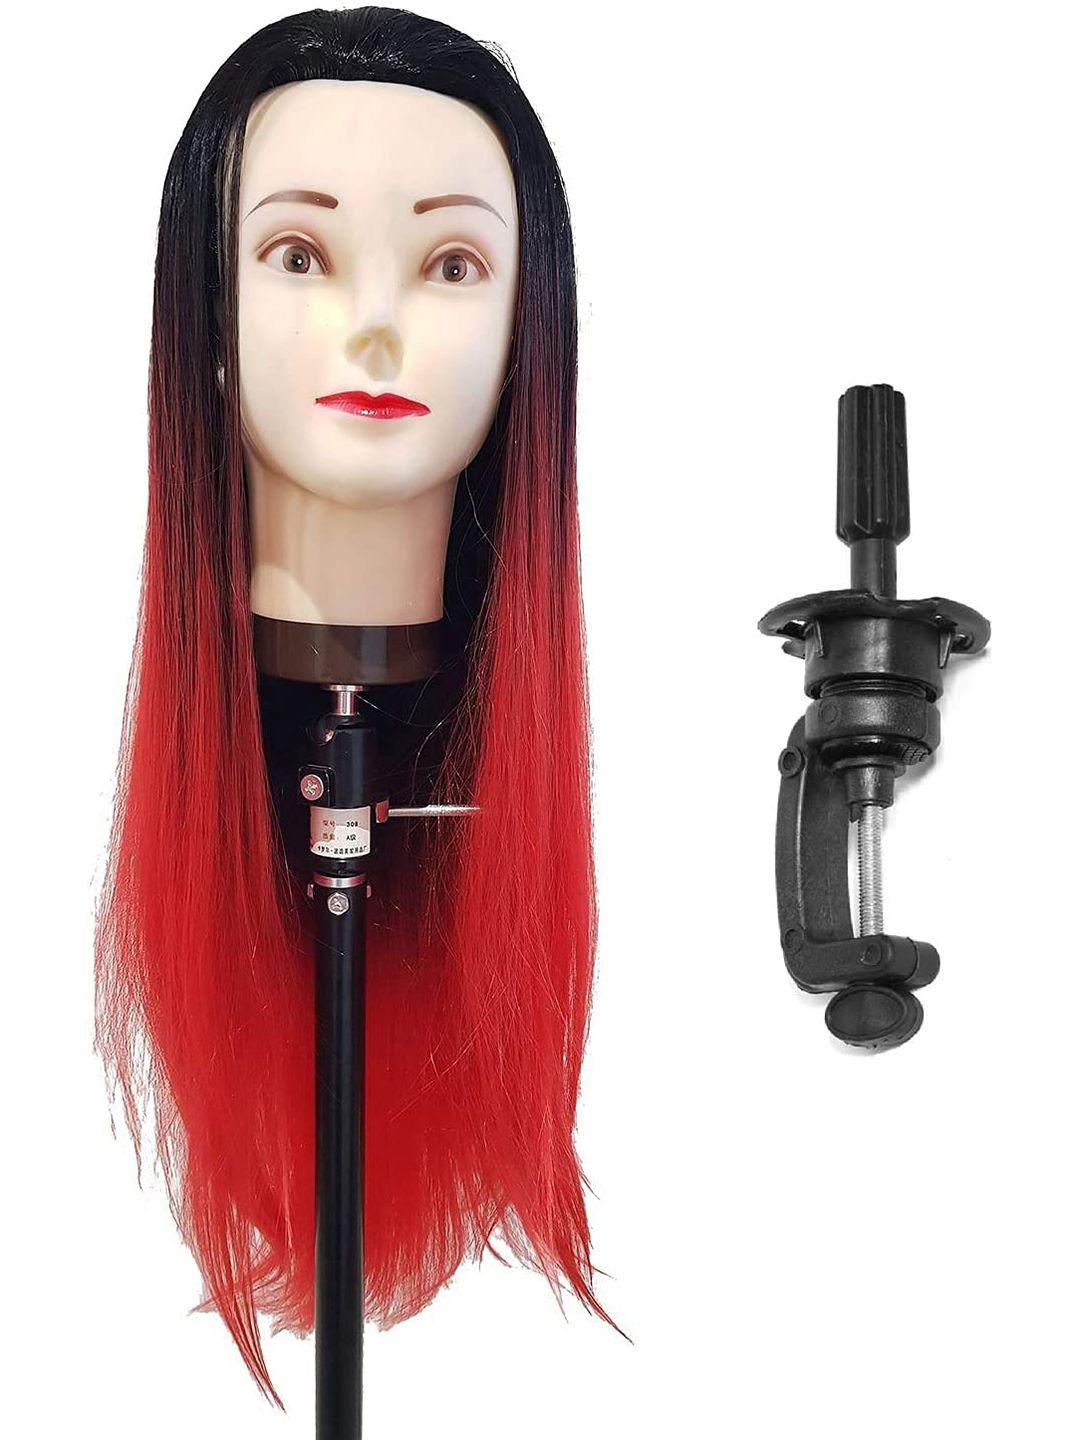 chronex professional hair styling mannequin hair dummy - red